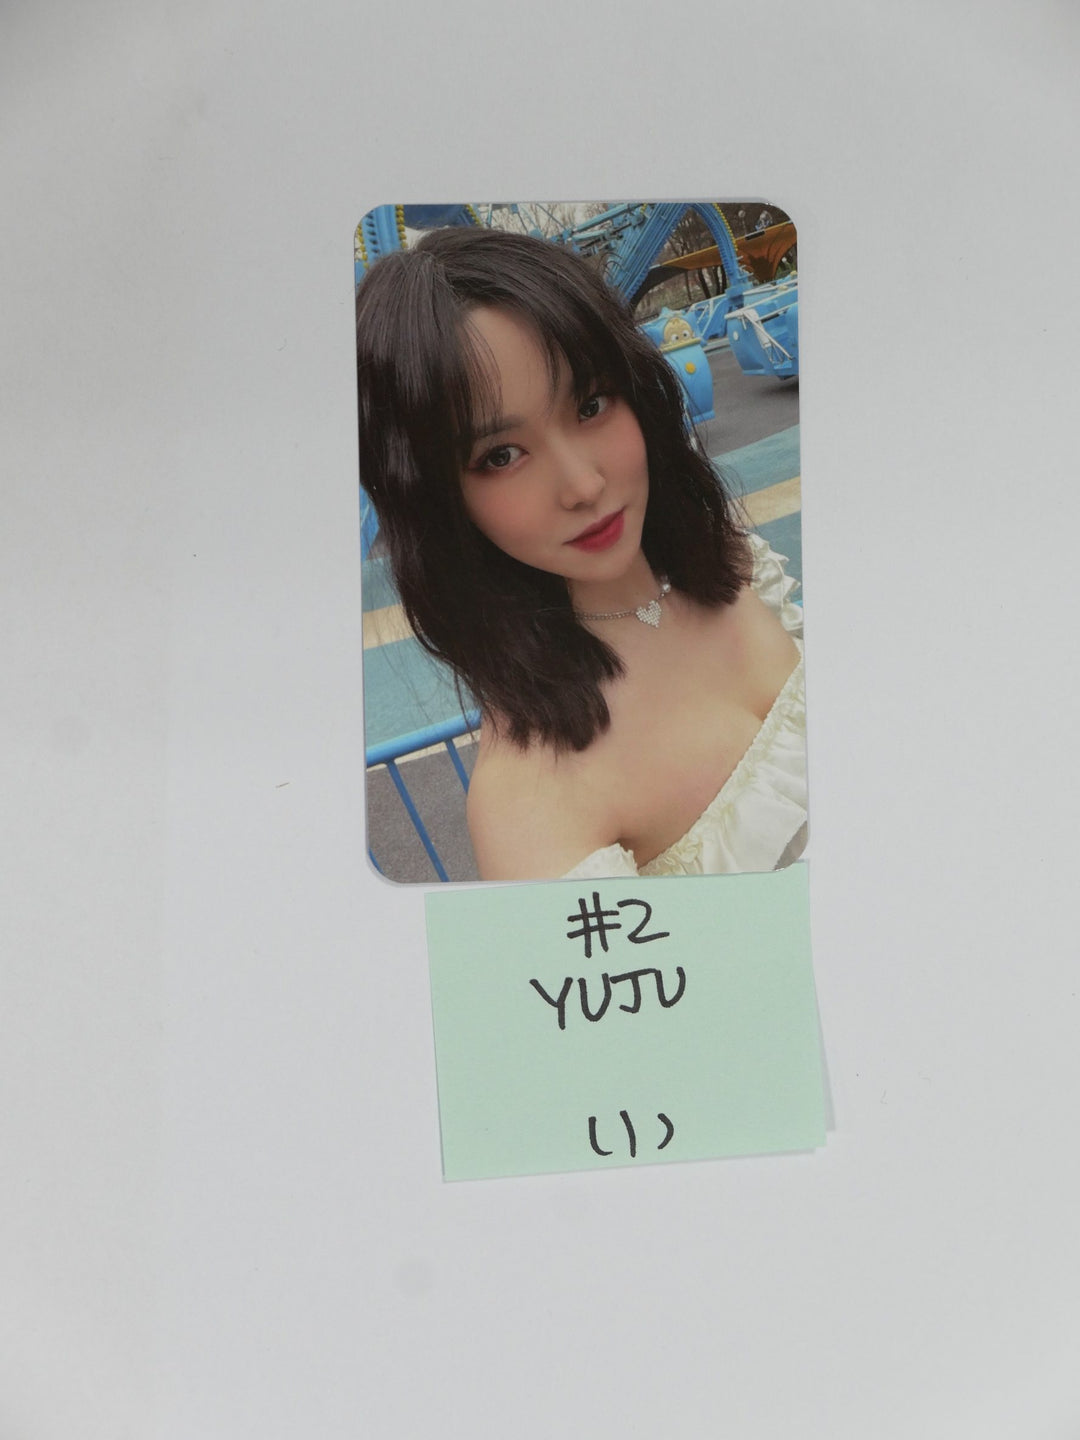 YUJU (Of 여자친구) "[REC.]" - 오피셜 포토카드